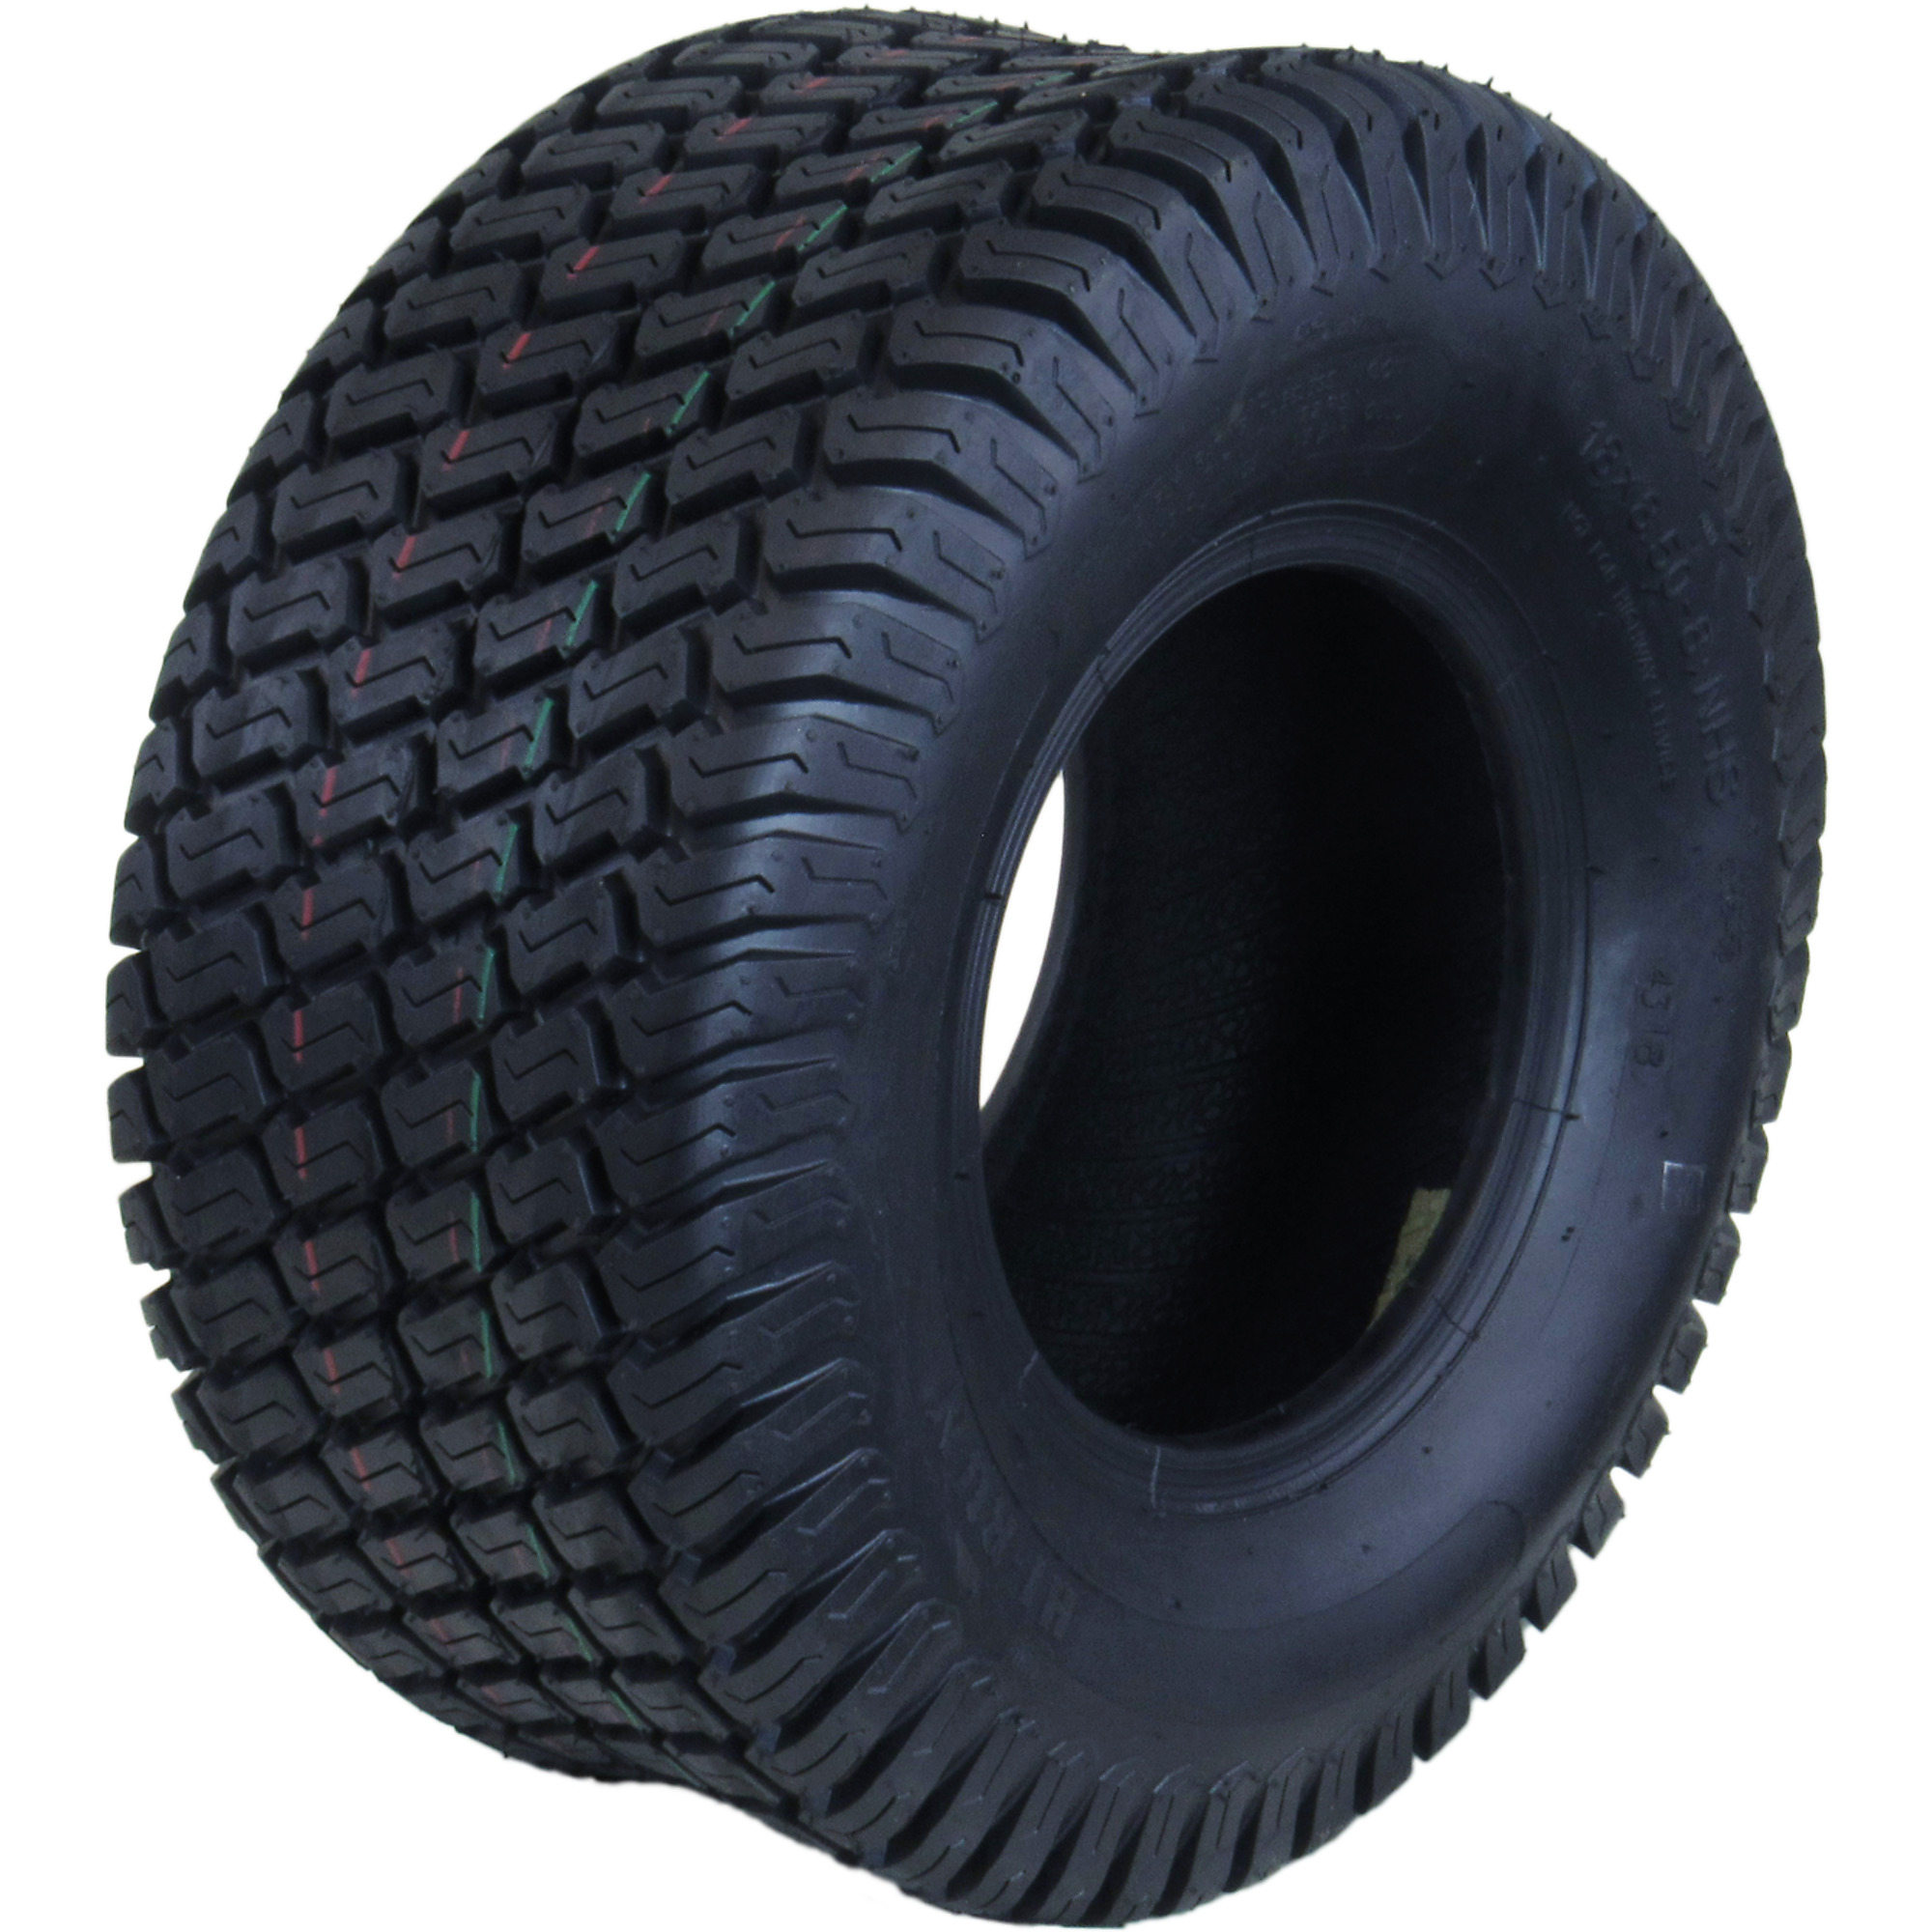 HI-RUN, Lawn Garden Tire, SU05 Turf, Tire Size 18X8.50-8 Load Range Rating B, Model WD1133